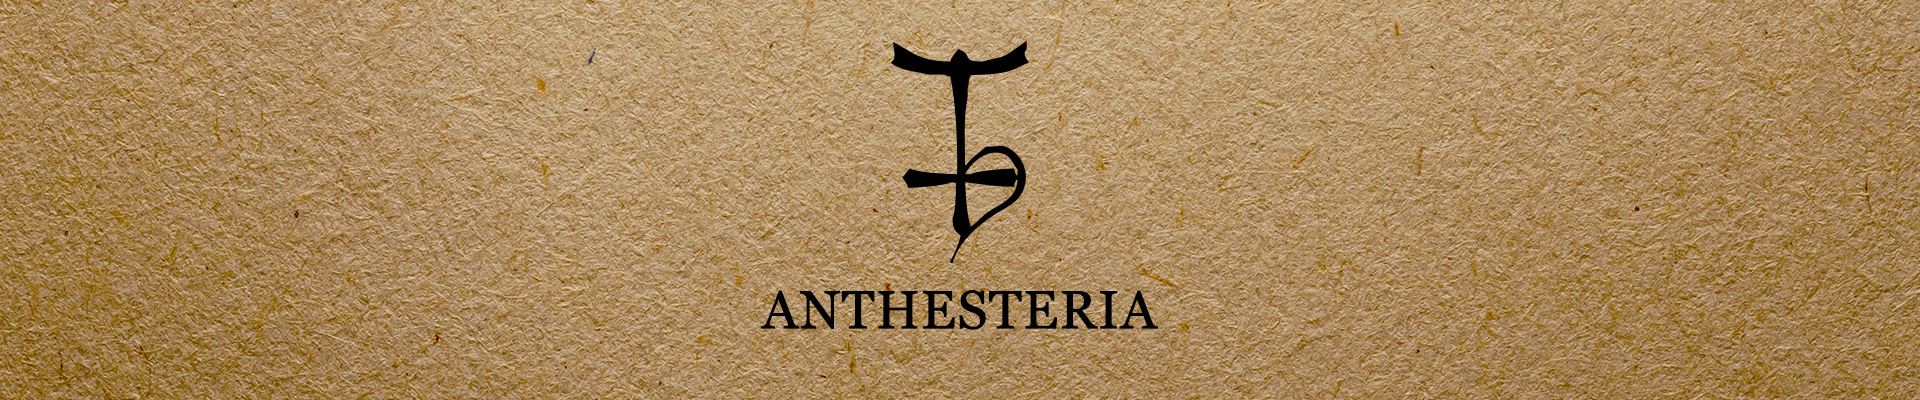 Несколько нотаций про: Anthesteria